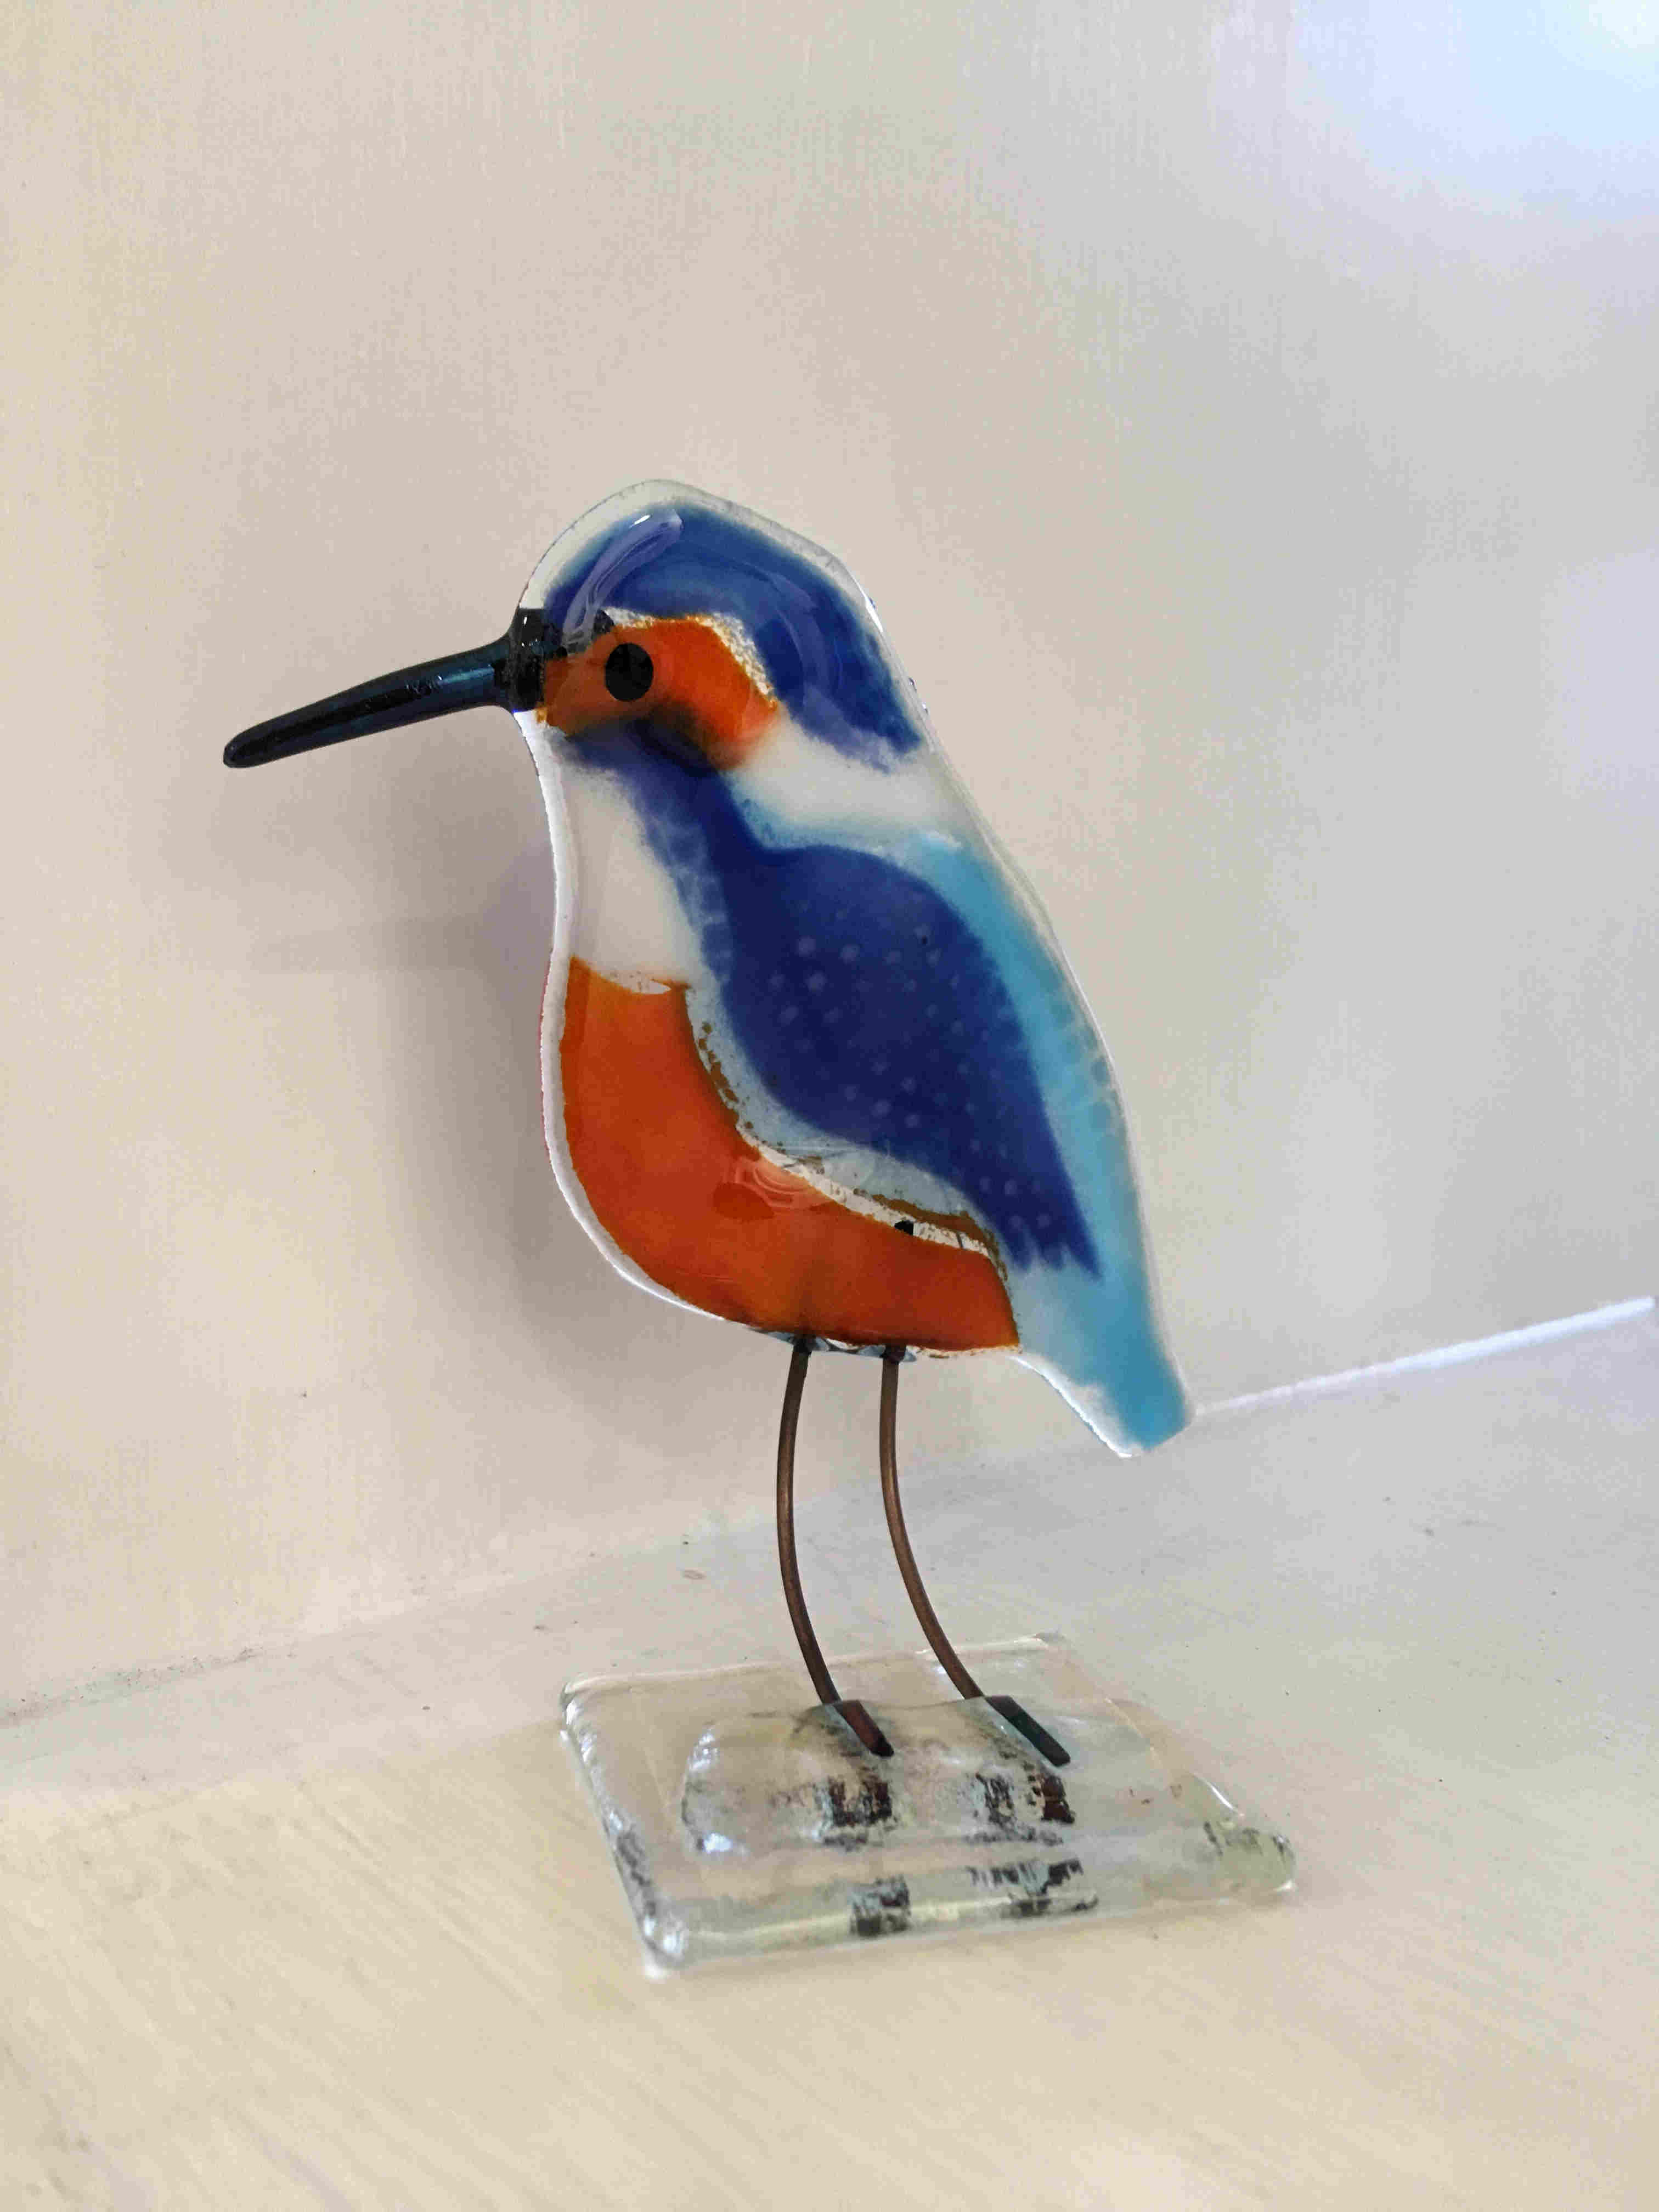 'Kingfisher' by artist Dorte Pape